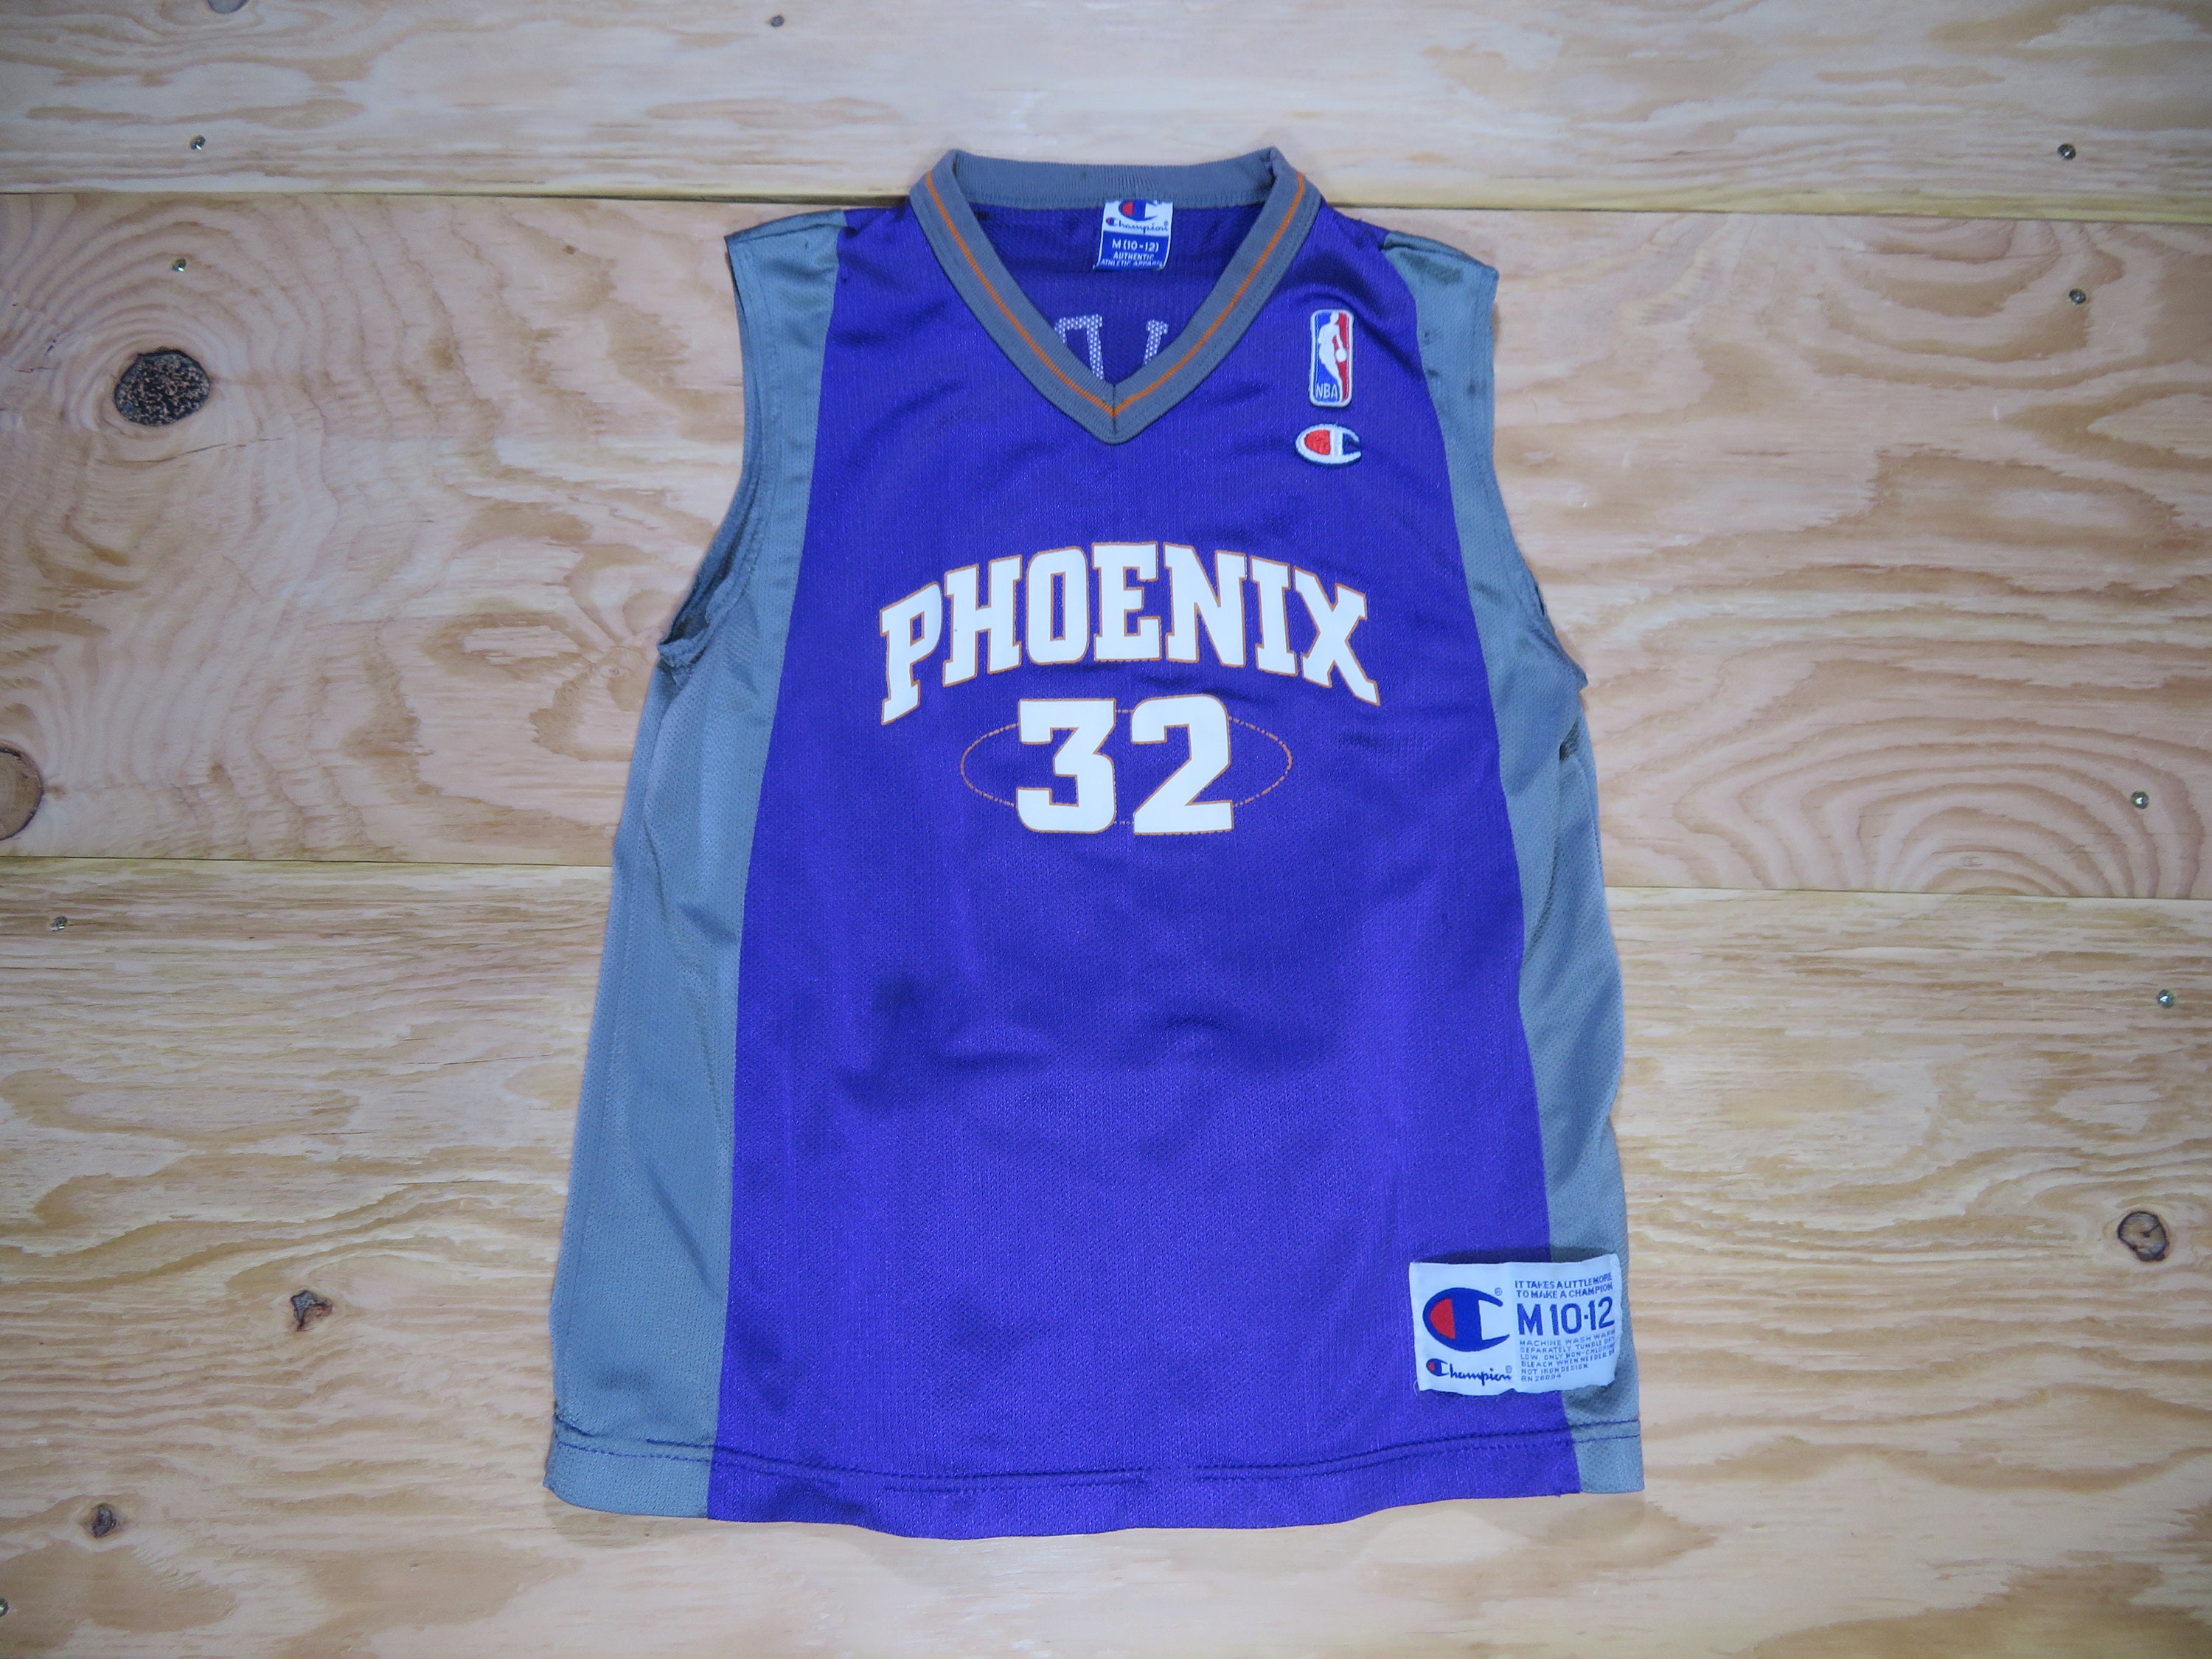 Jason Kidd Autographed Phoenix Custom Black Basketball Jersey - BAS